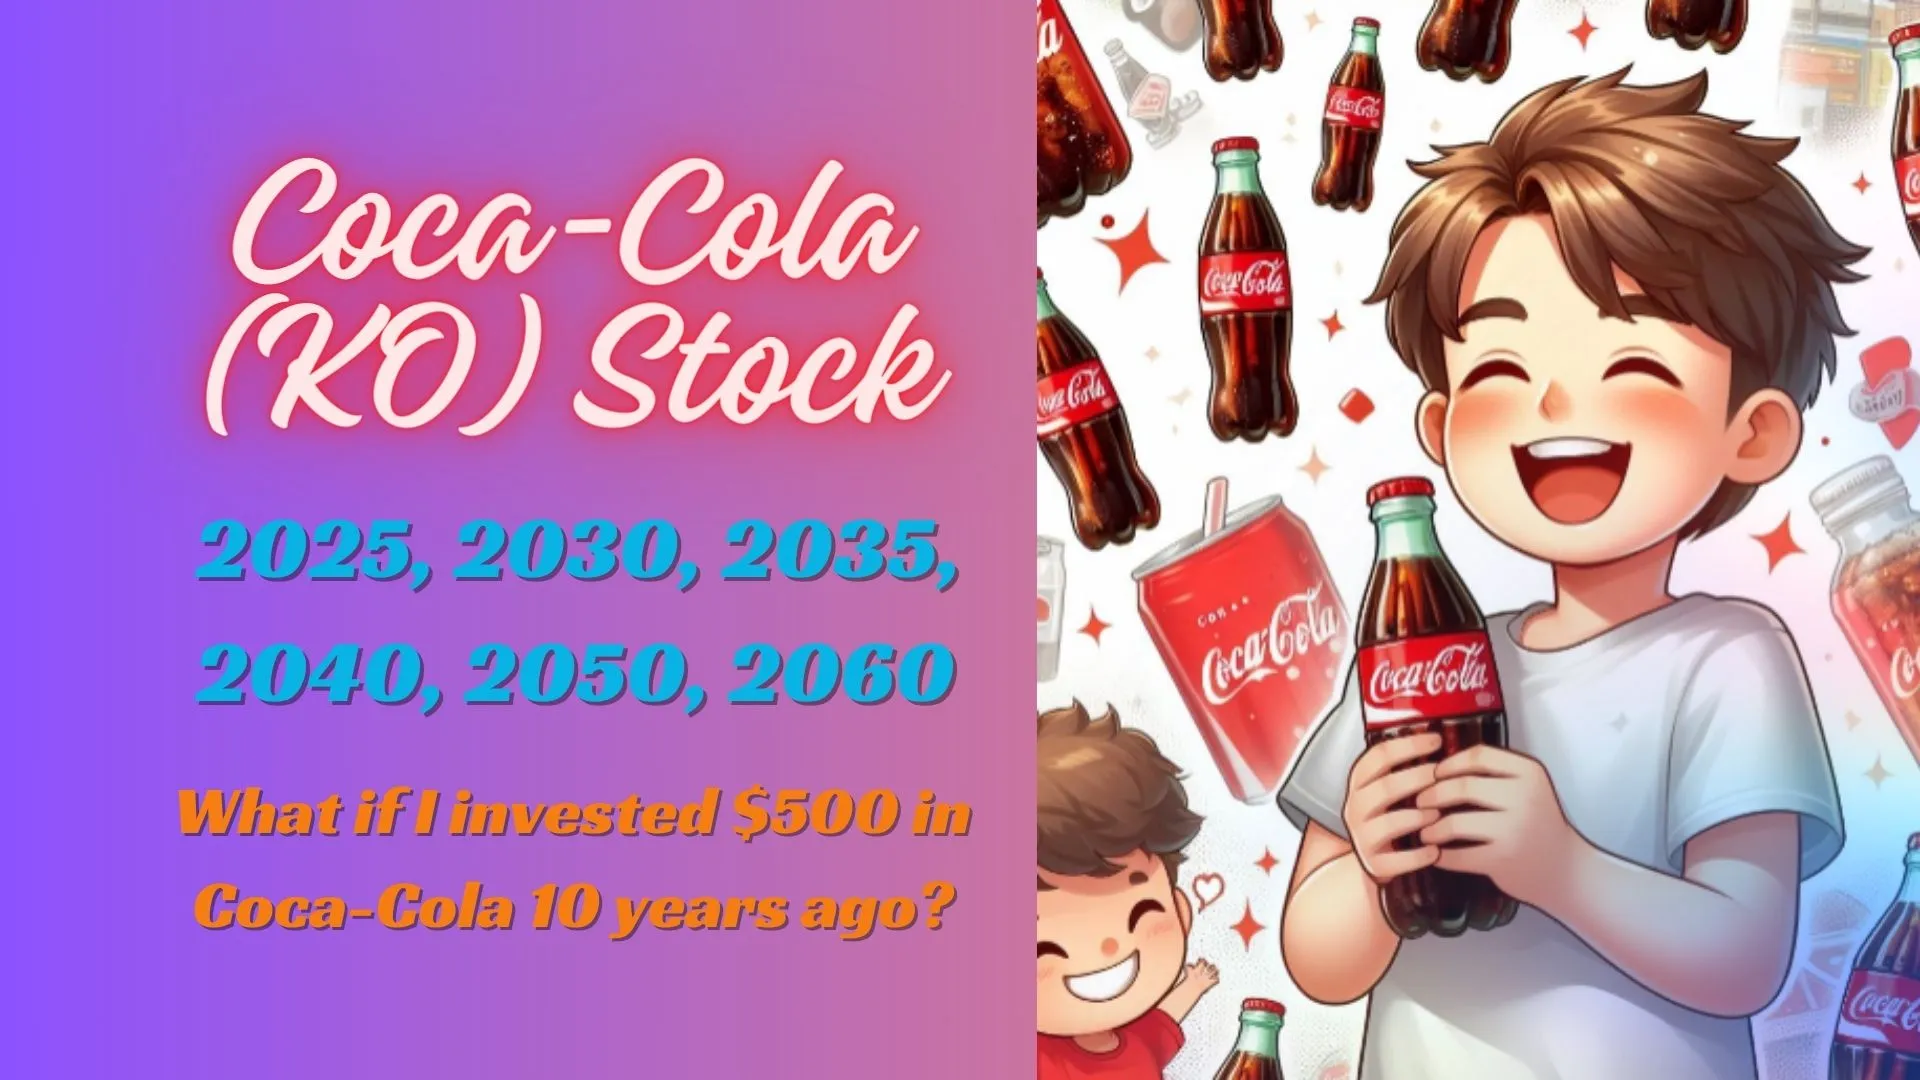 Coca-Cola (KO) Stock Forecast and Price prediction